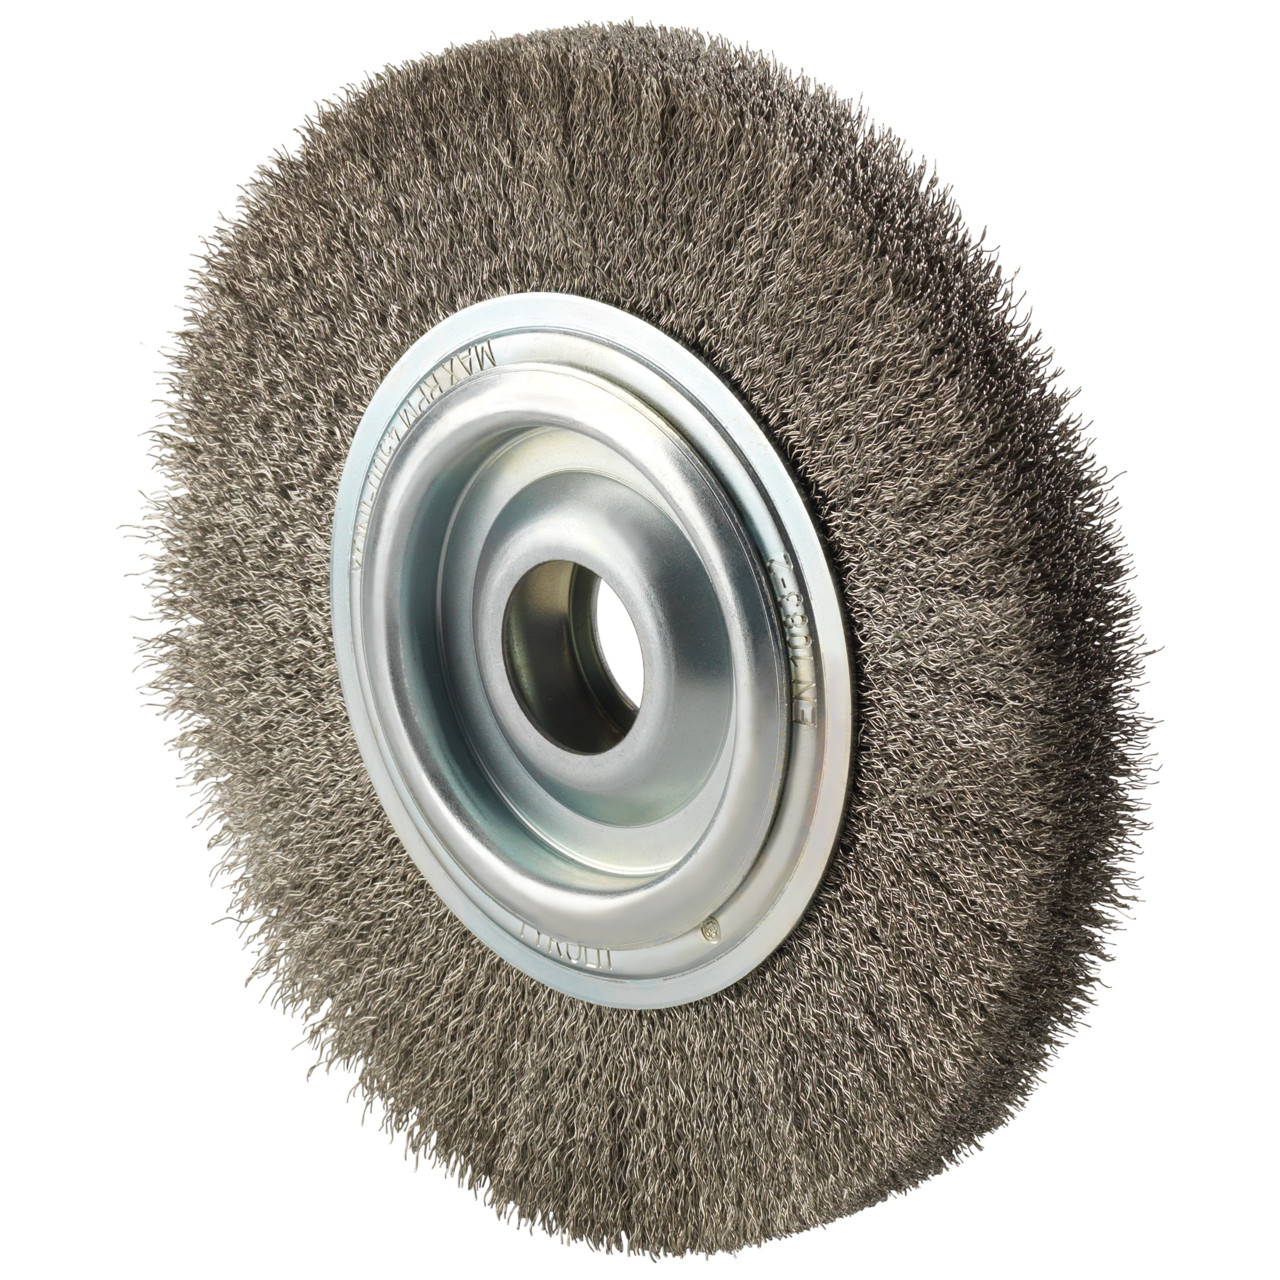 Spazzole rotonde Tyrolit DxLxH 150x18x27x32 Per acciaio inox, forma: 1RDW - (spazzole rotonde), Art. 896116